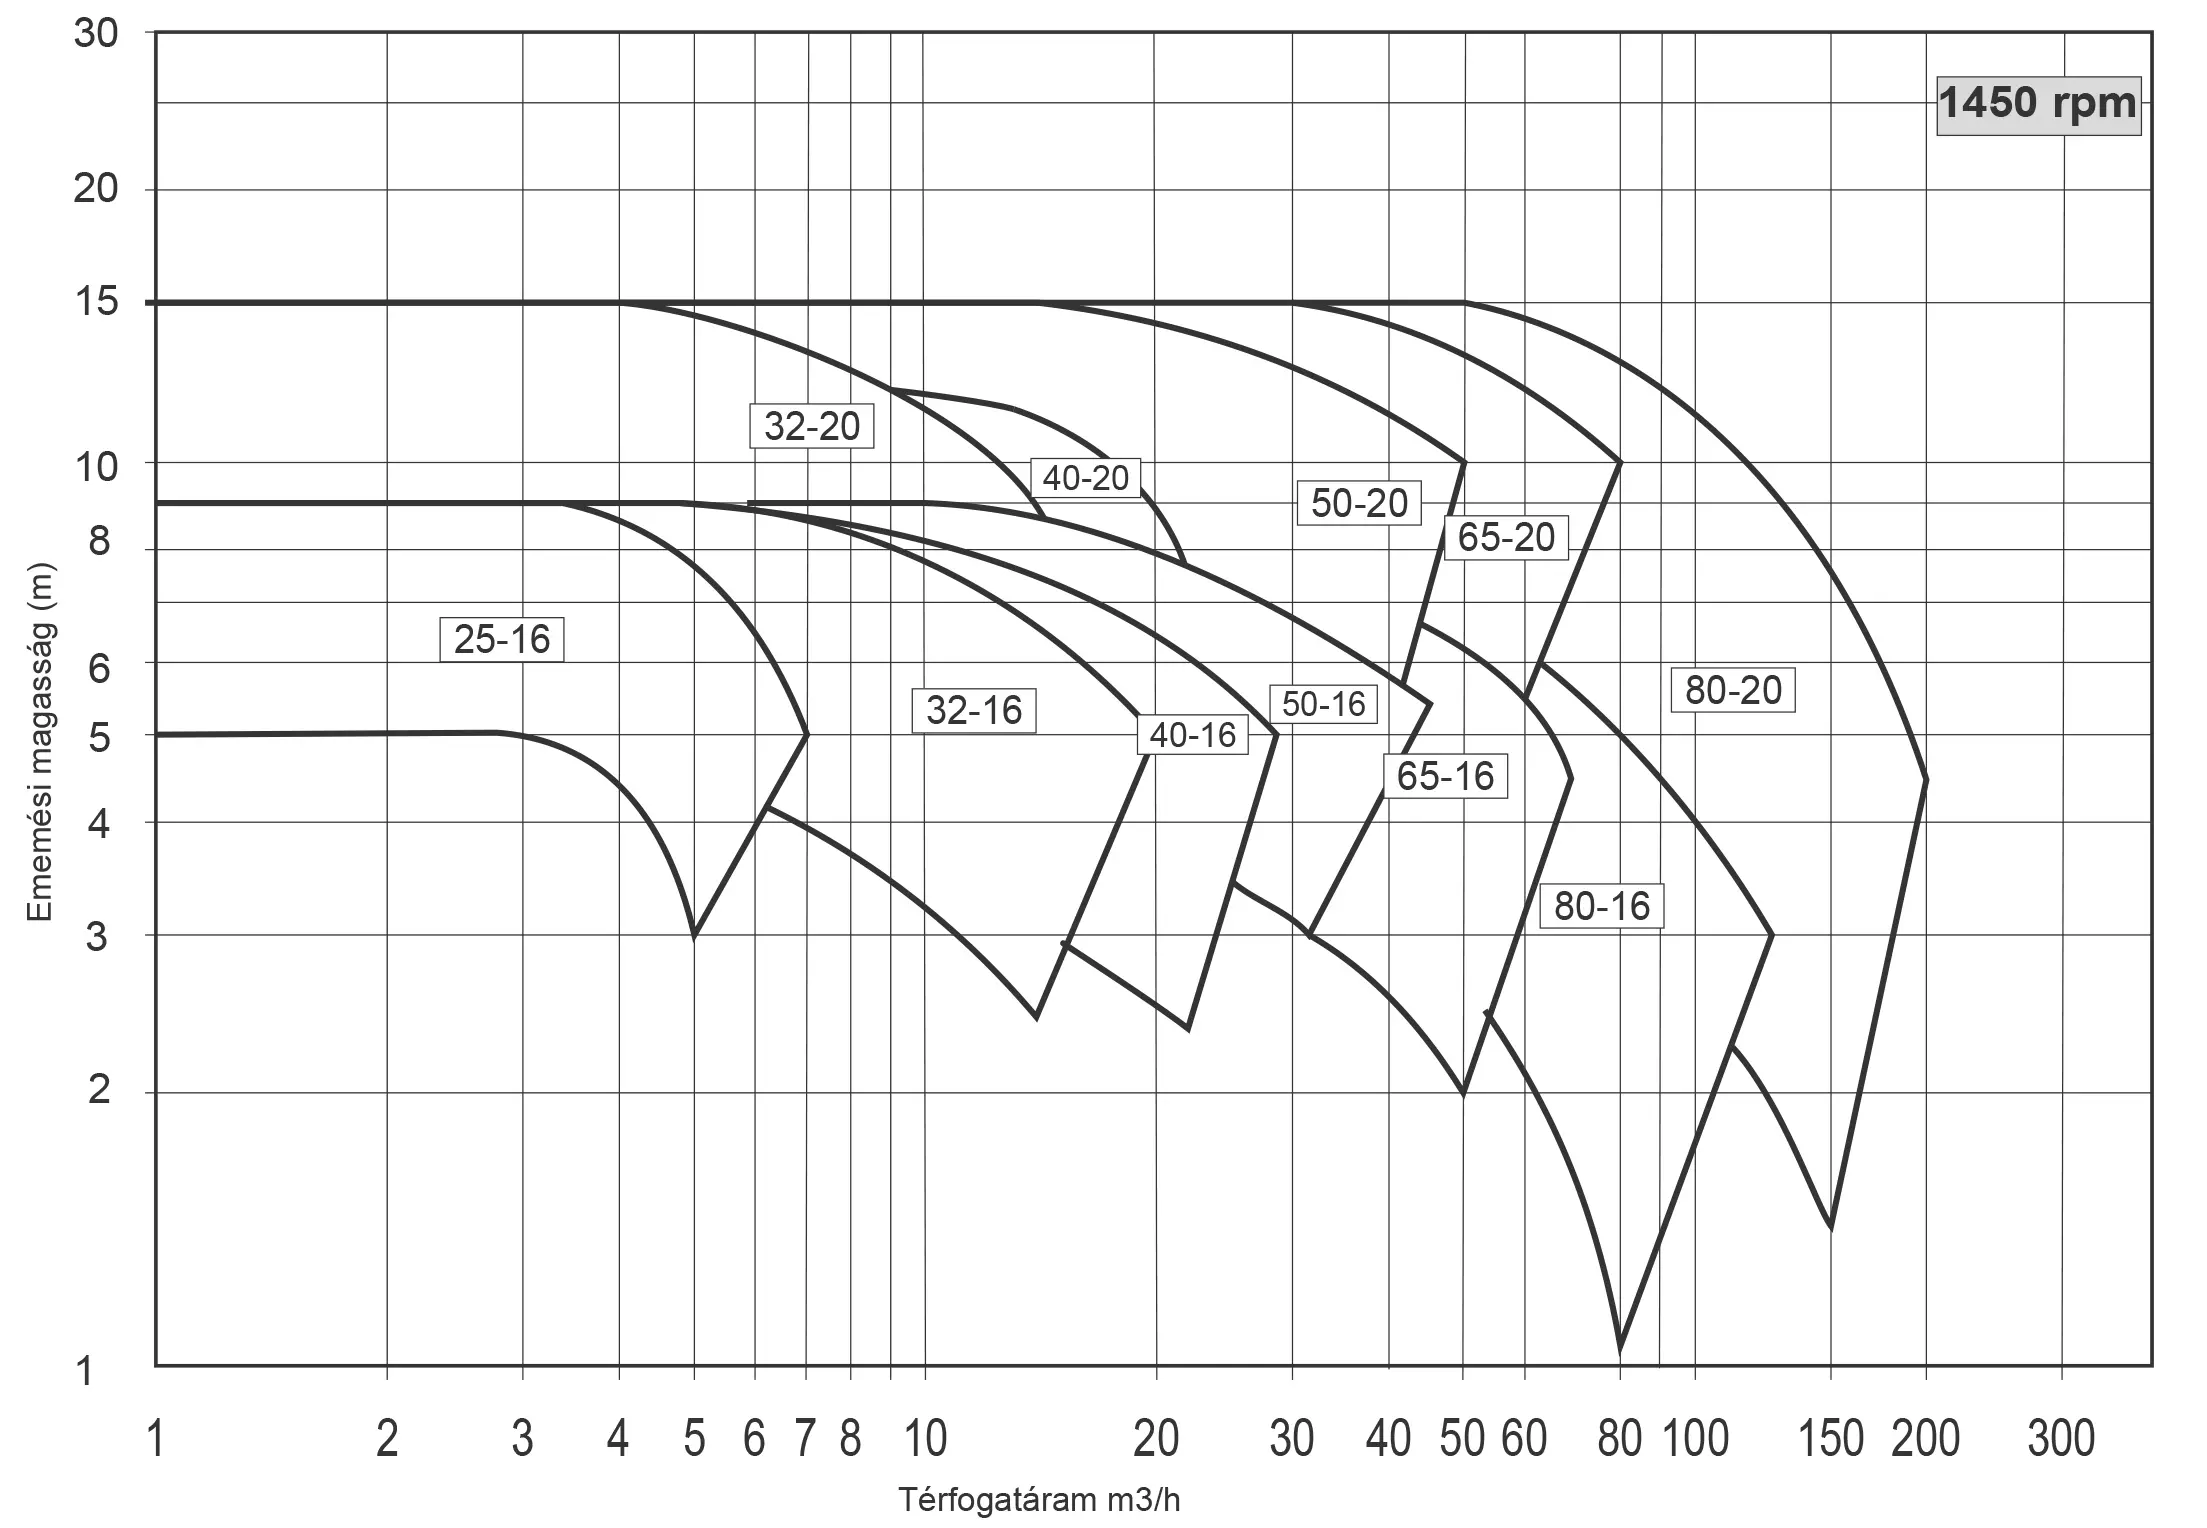 HD Performance curves